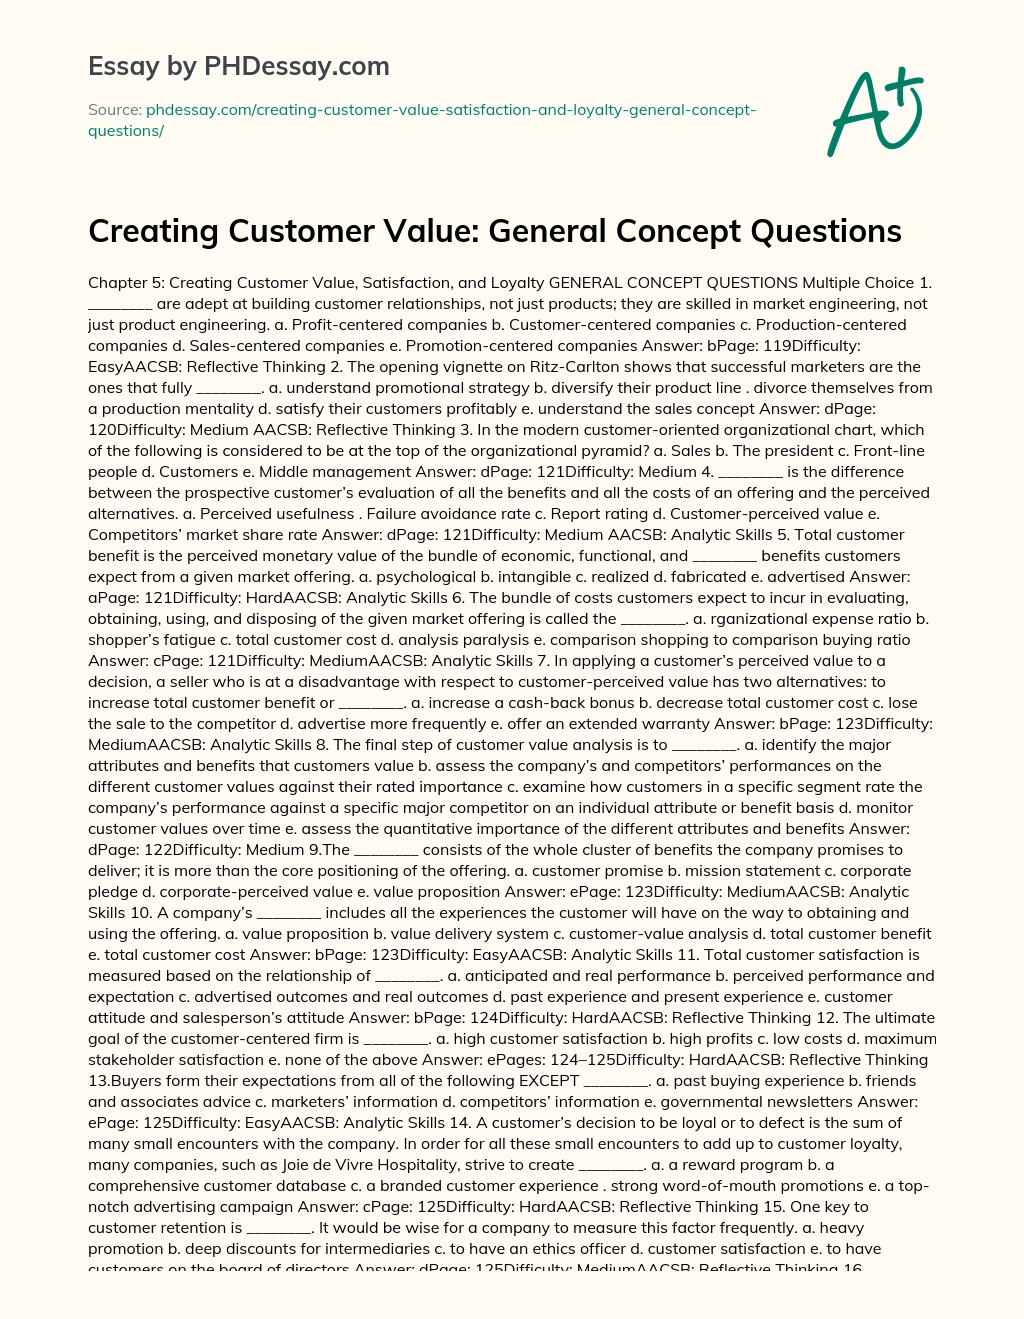 Creating Customer Value: General Concept Questions essay